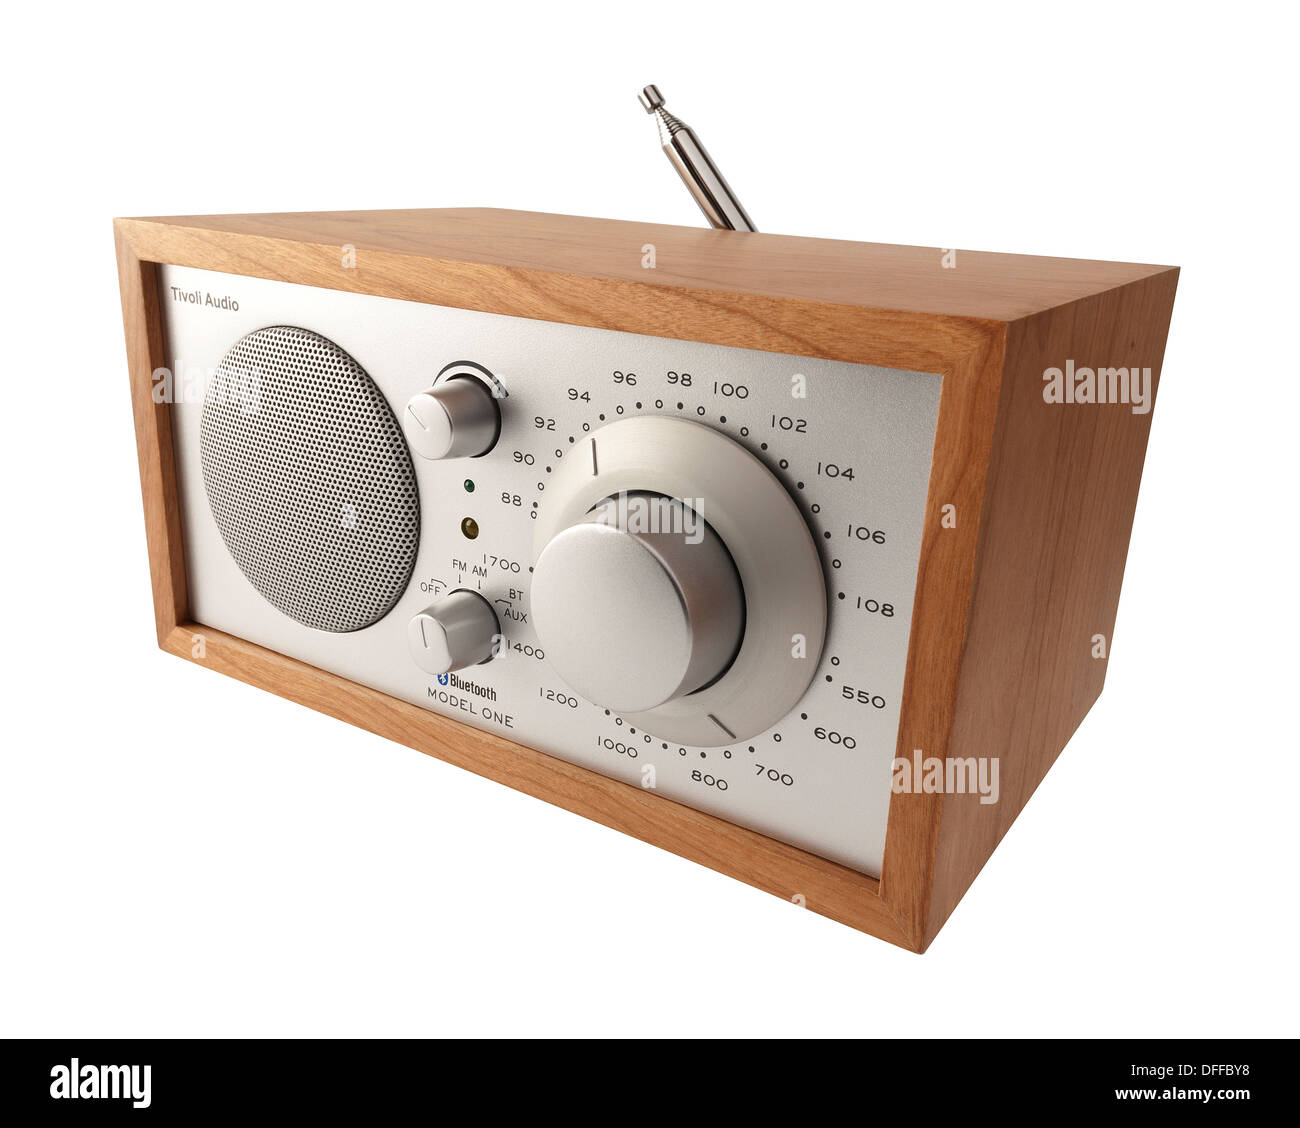 Tivoli Audio DAB radio Model One Stock Photo - Alamy